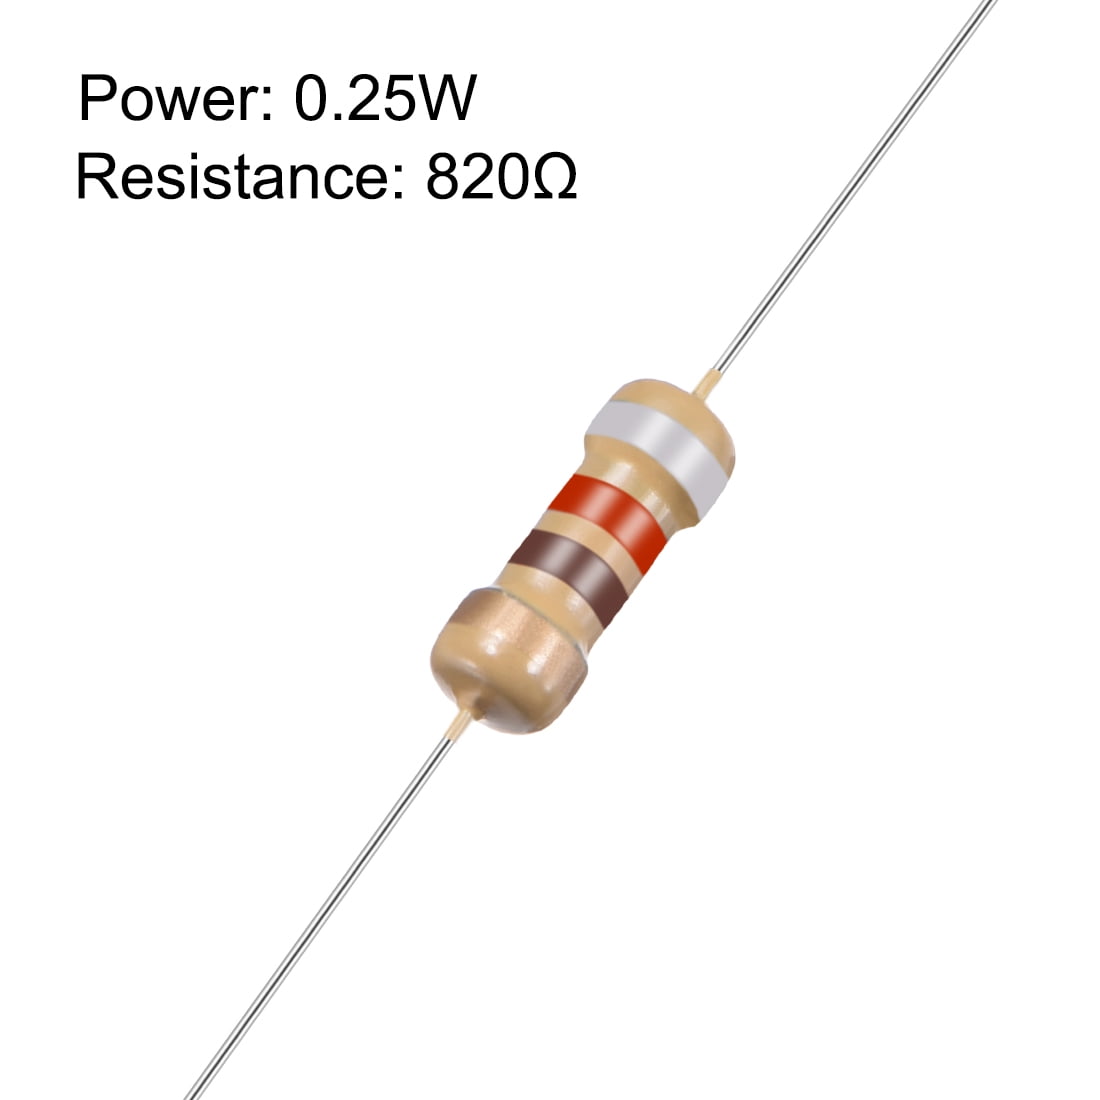 resistors lot of 50pcs US SELLER CFM 820 ohm 1/4 watt 5% mini carbon film 